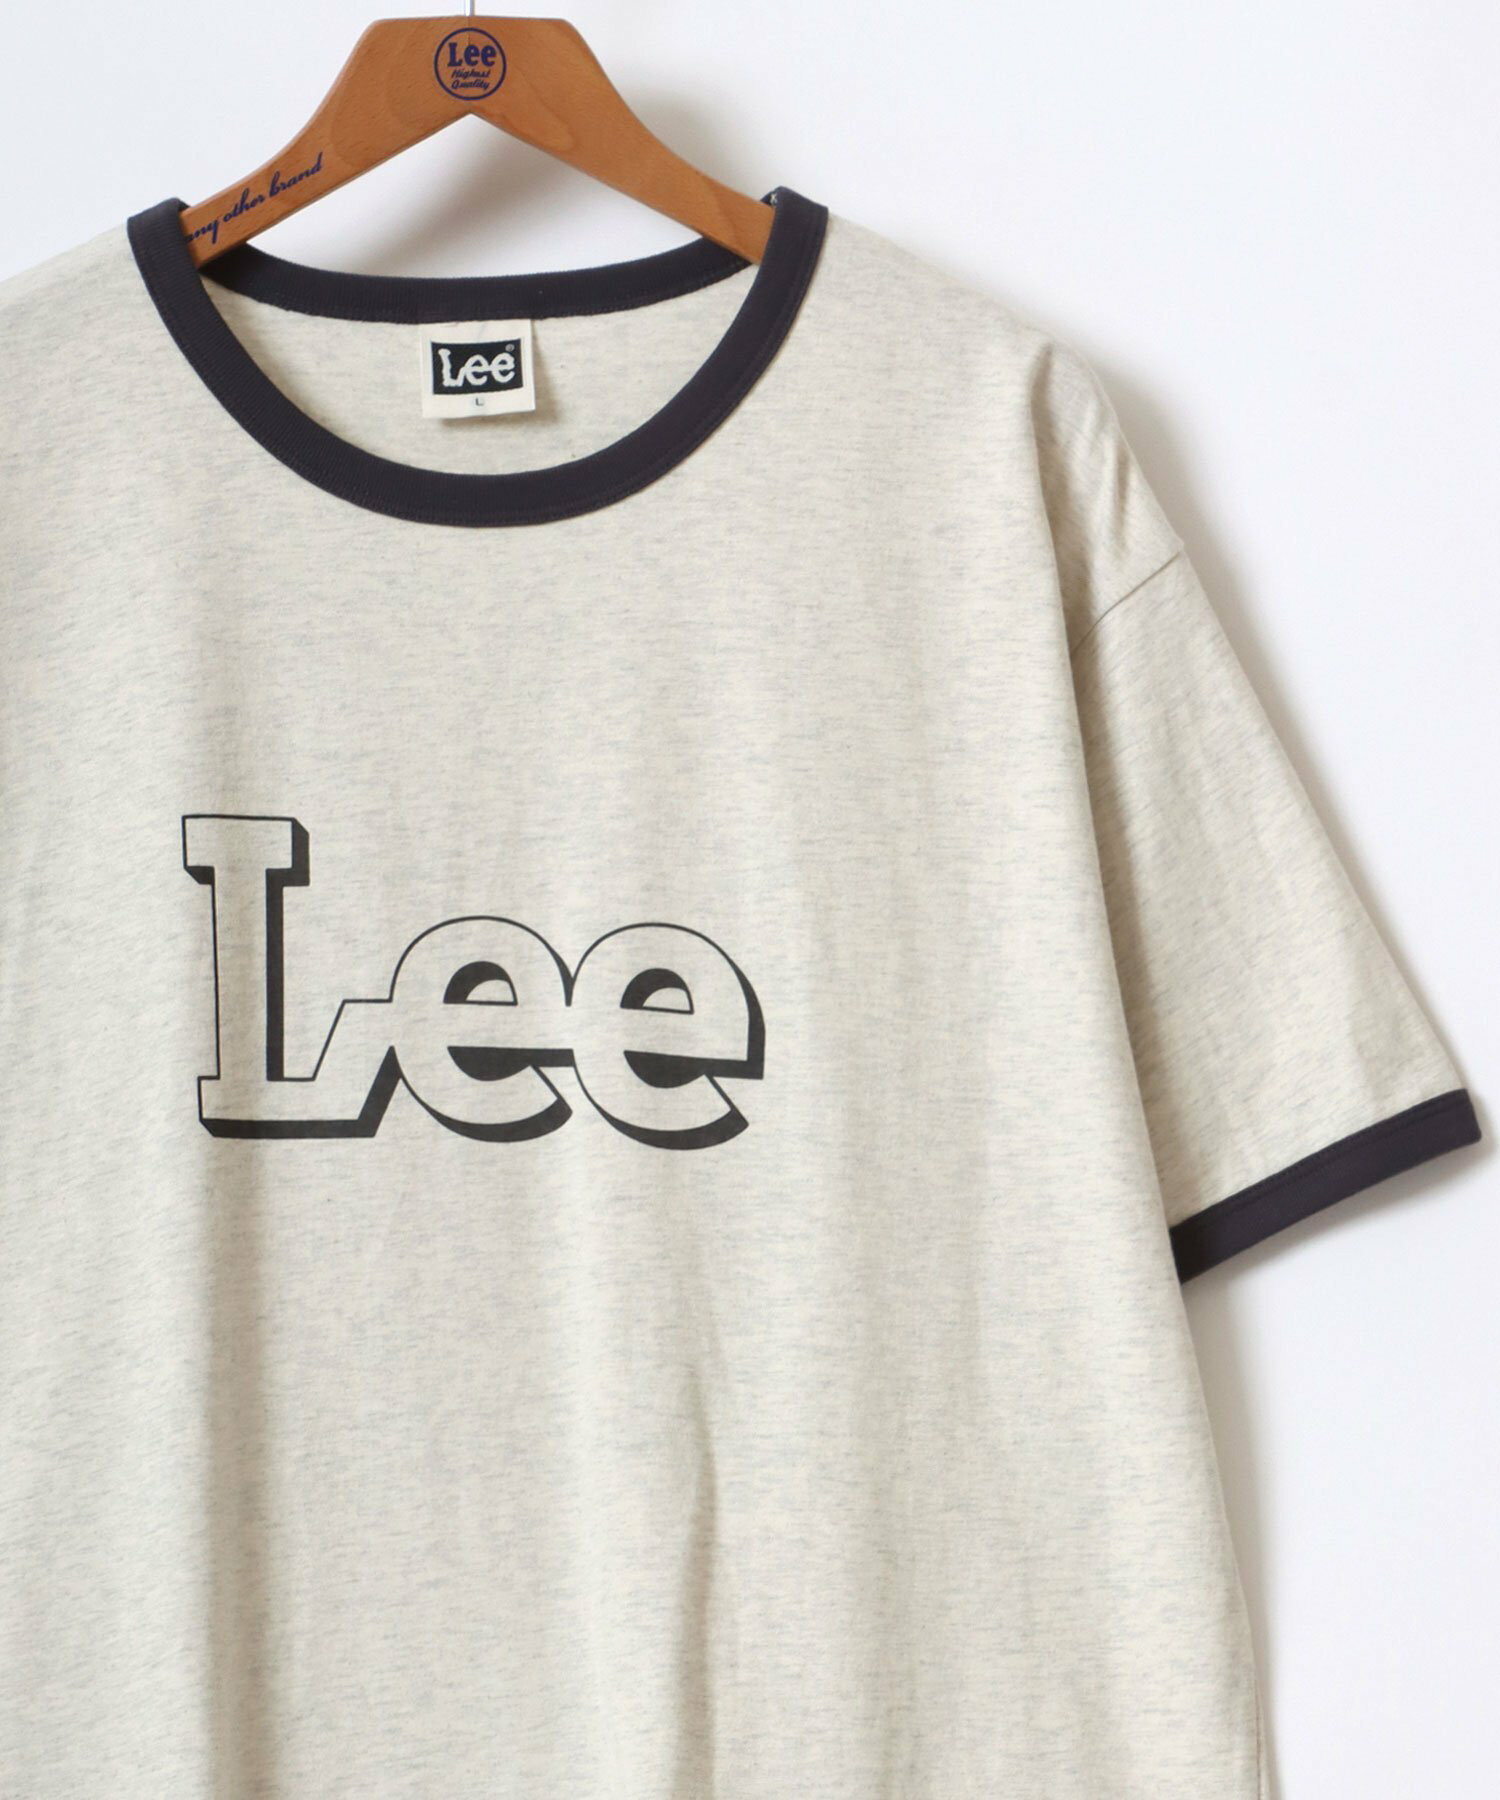 Lee Tシャツ ティーシャツ メンズ 半袖 オーバーサイズ ロゴ